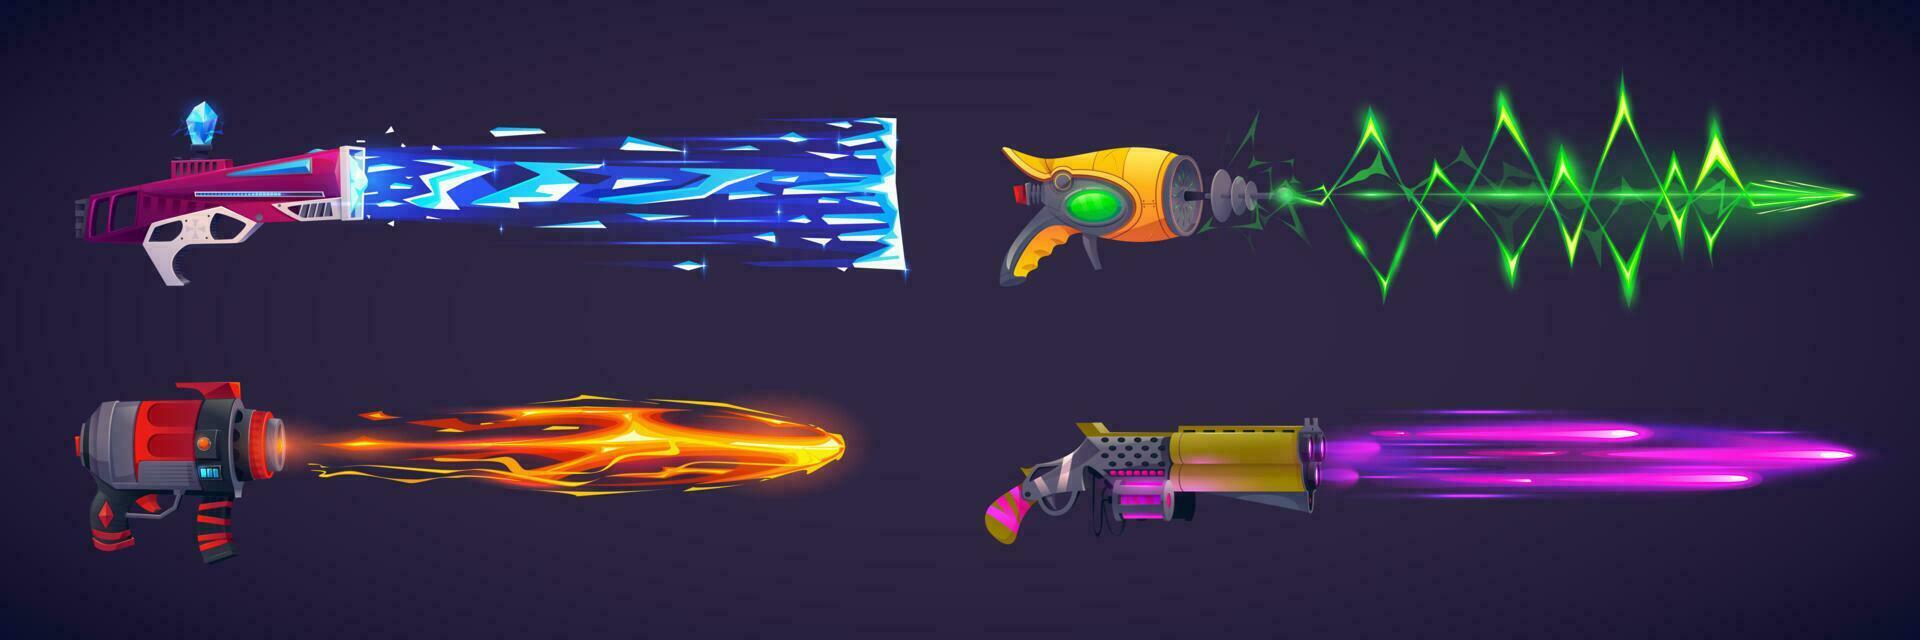 Magic game space gun with laser beam comic effect vector